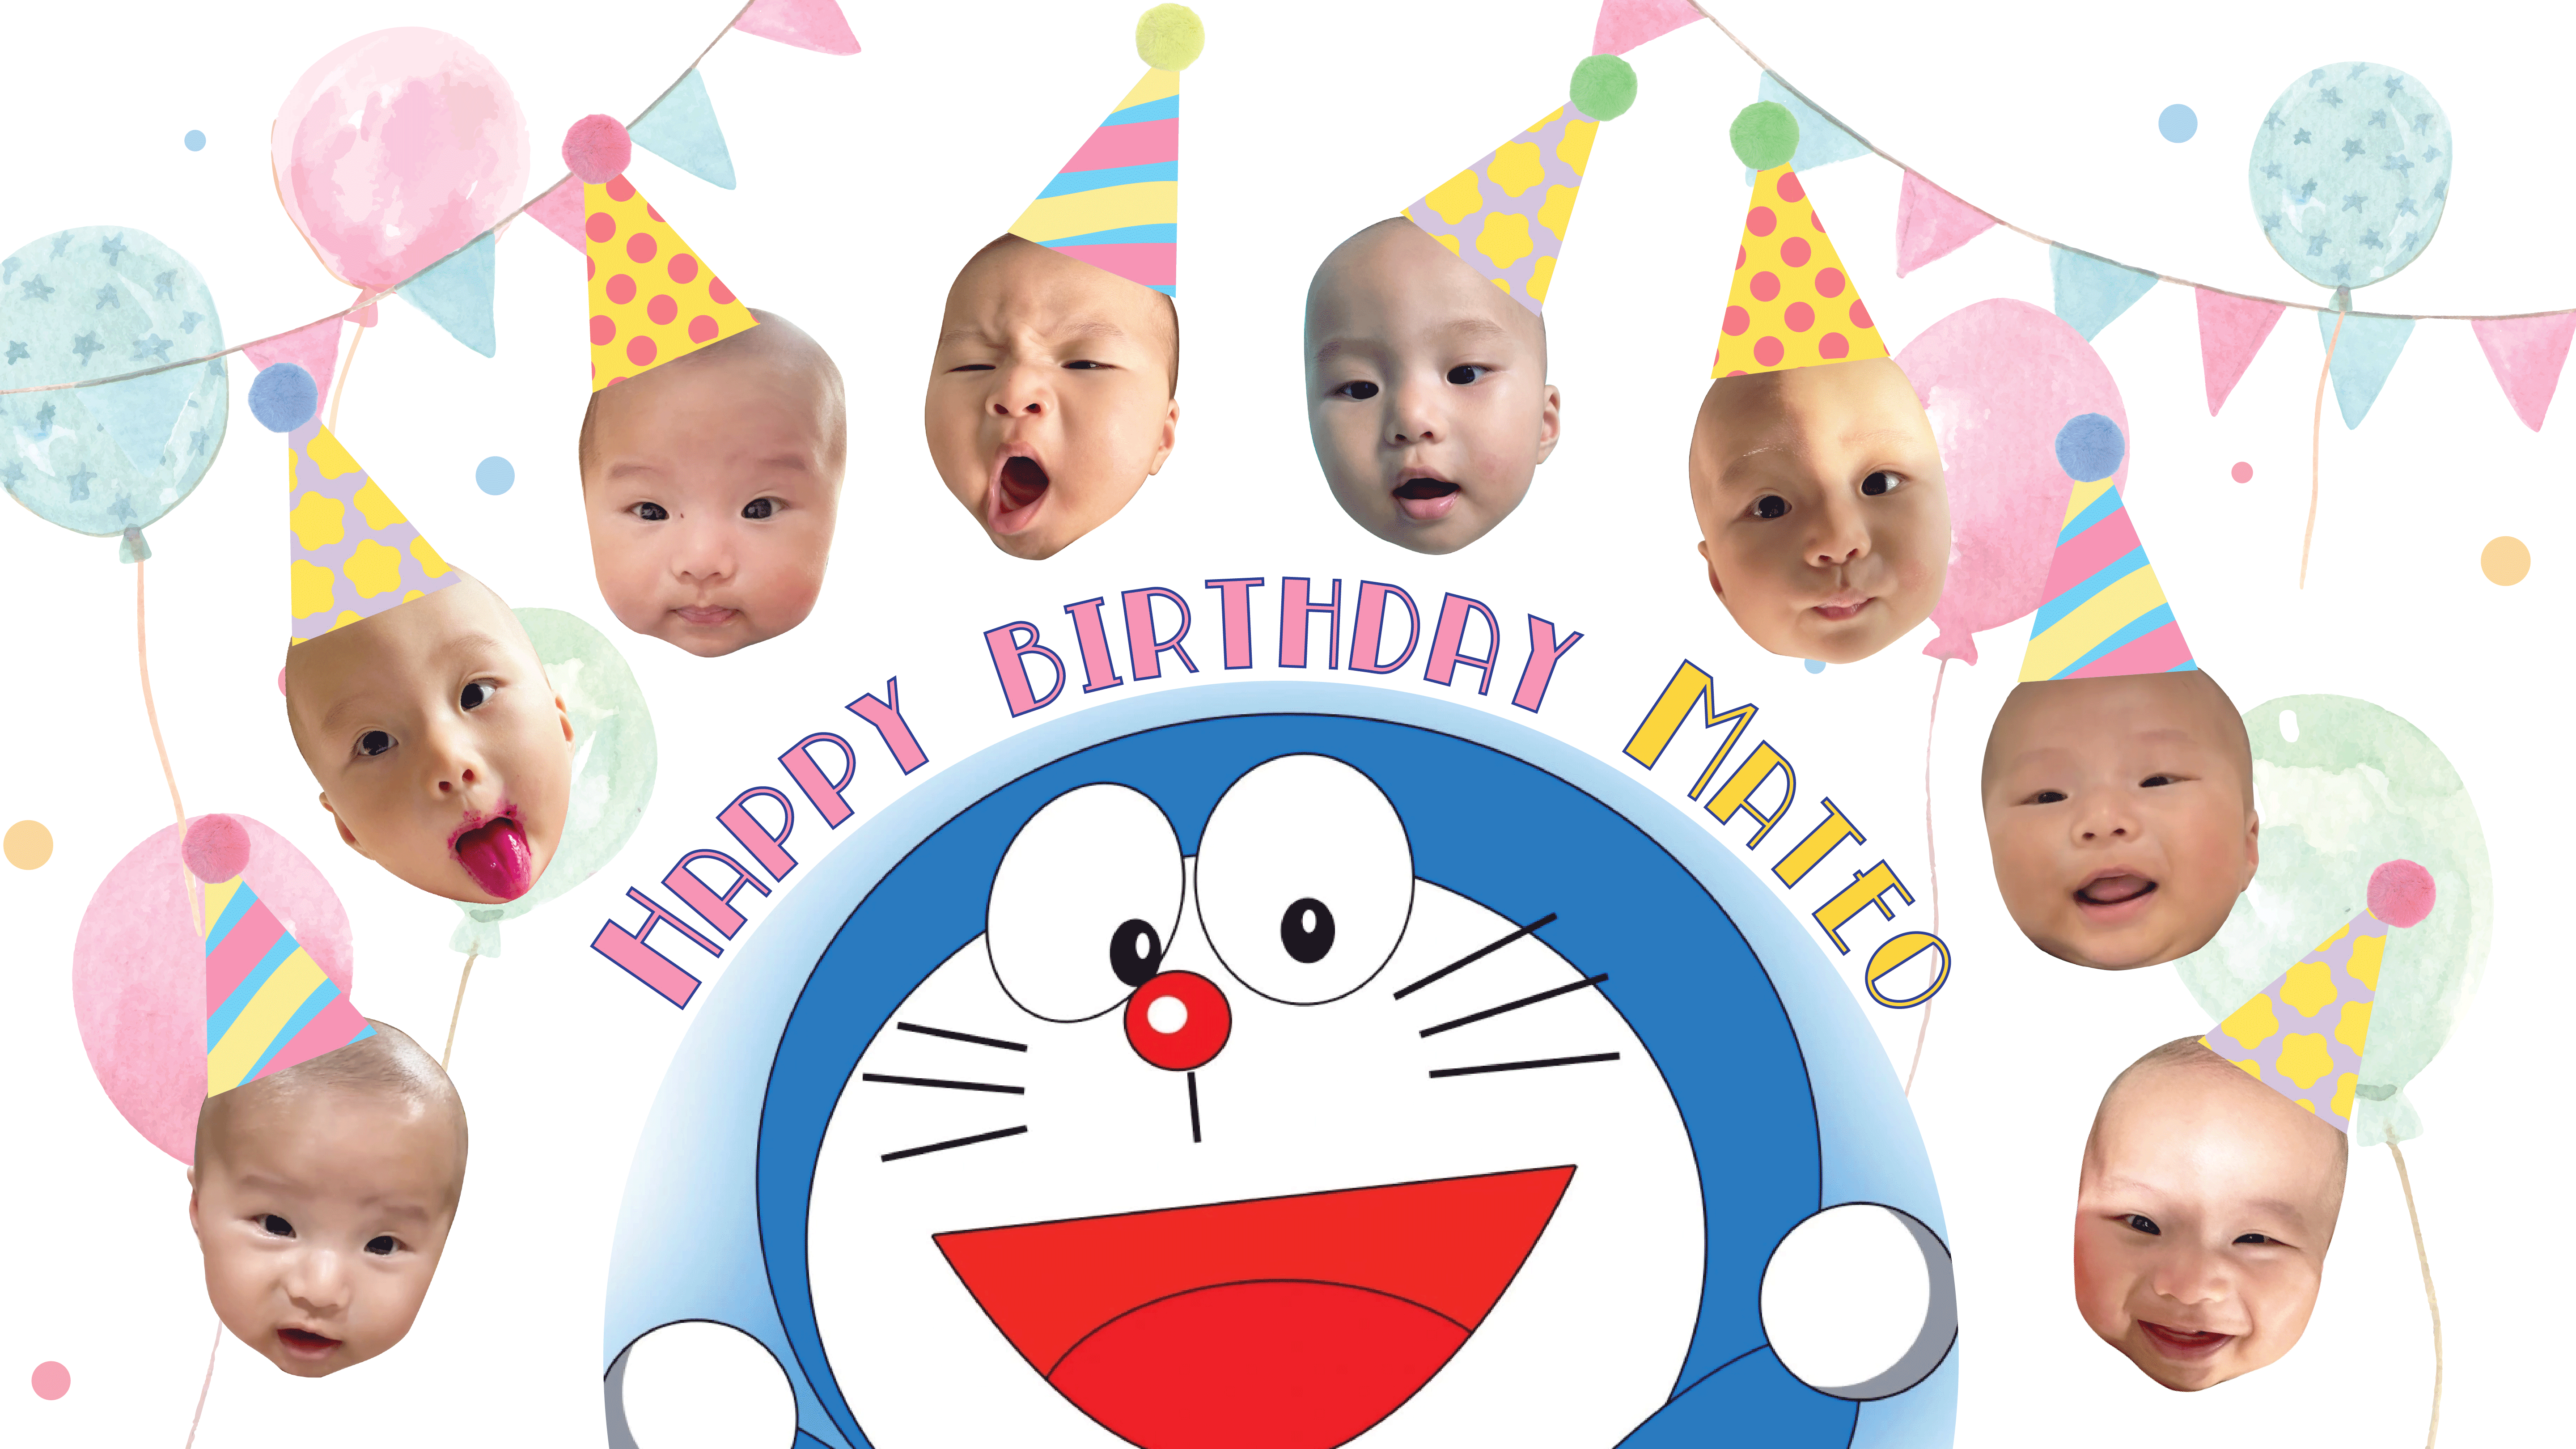 Mateo's First Birthday - Theme "Doraemon" celebartion graphic design